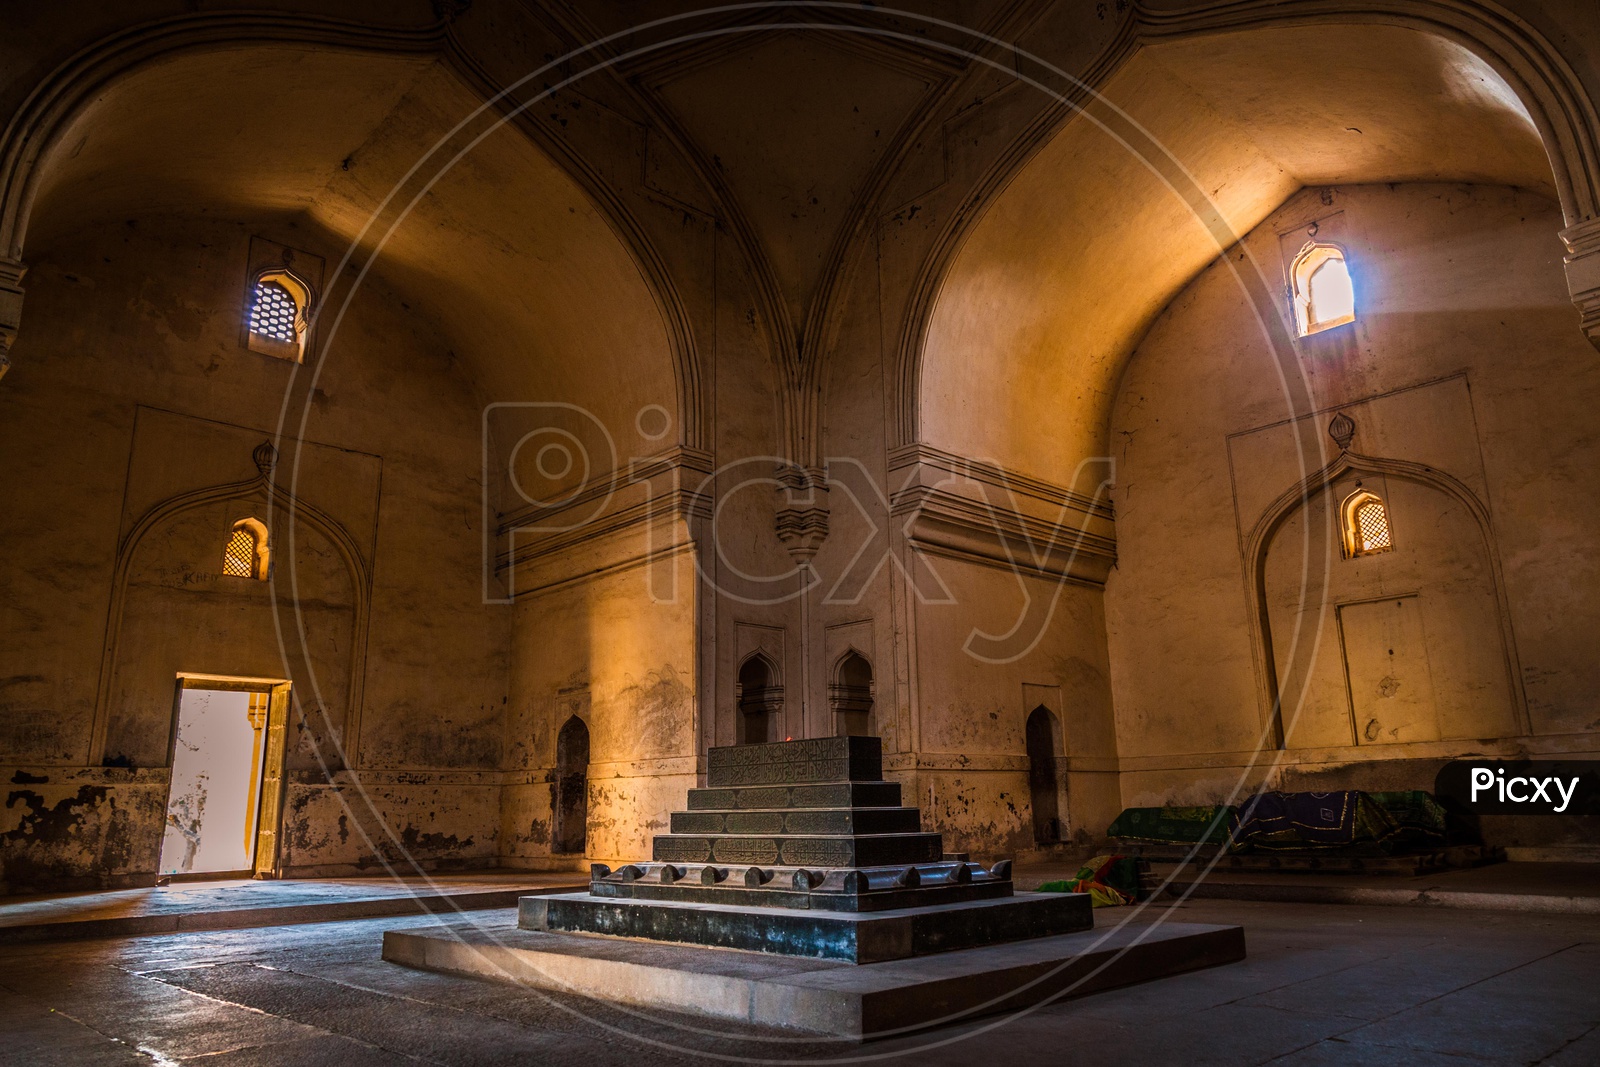 Inside Qutb Shahi Tombs